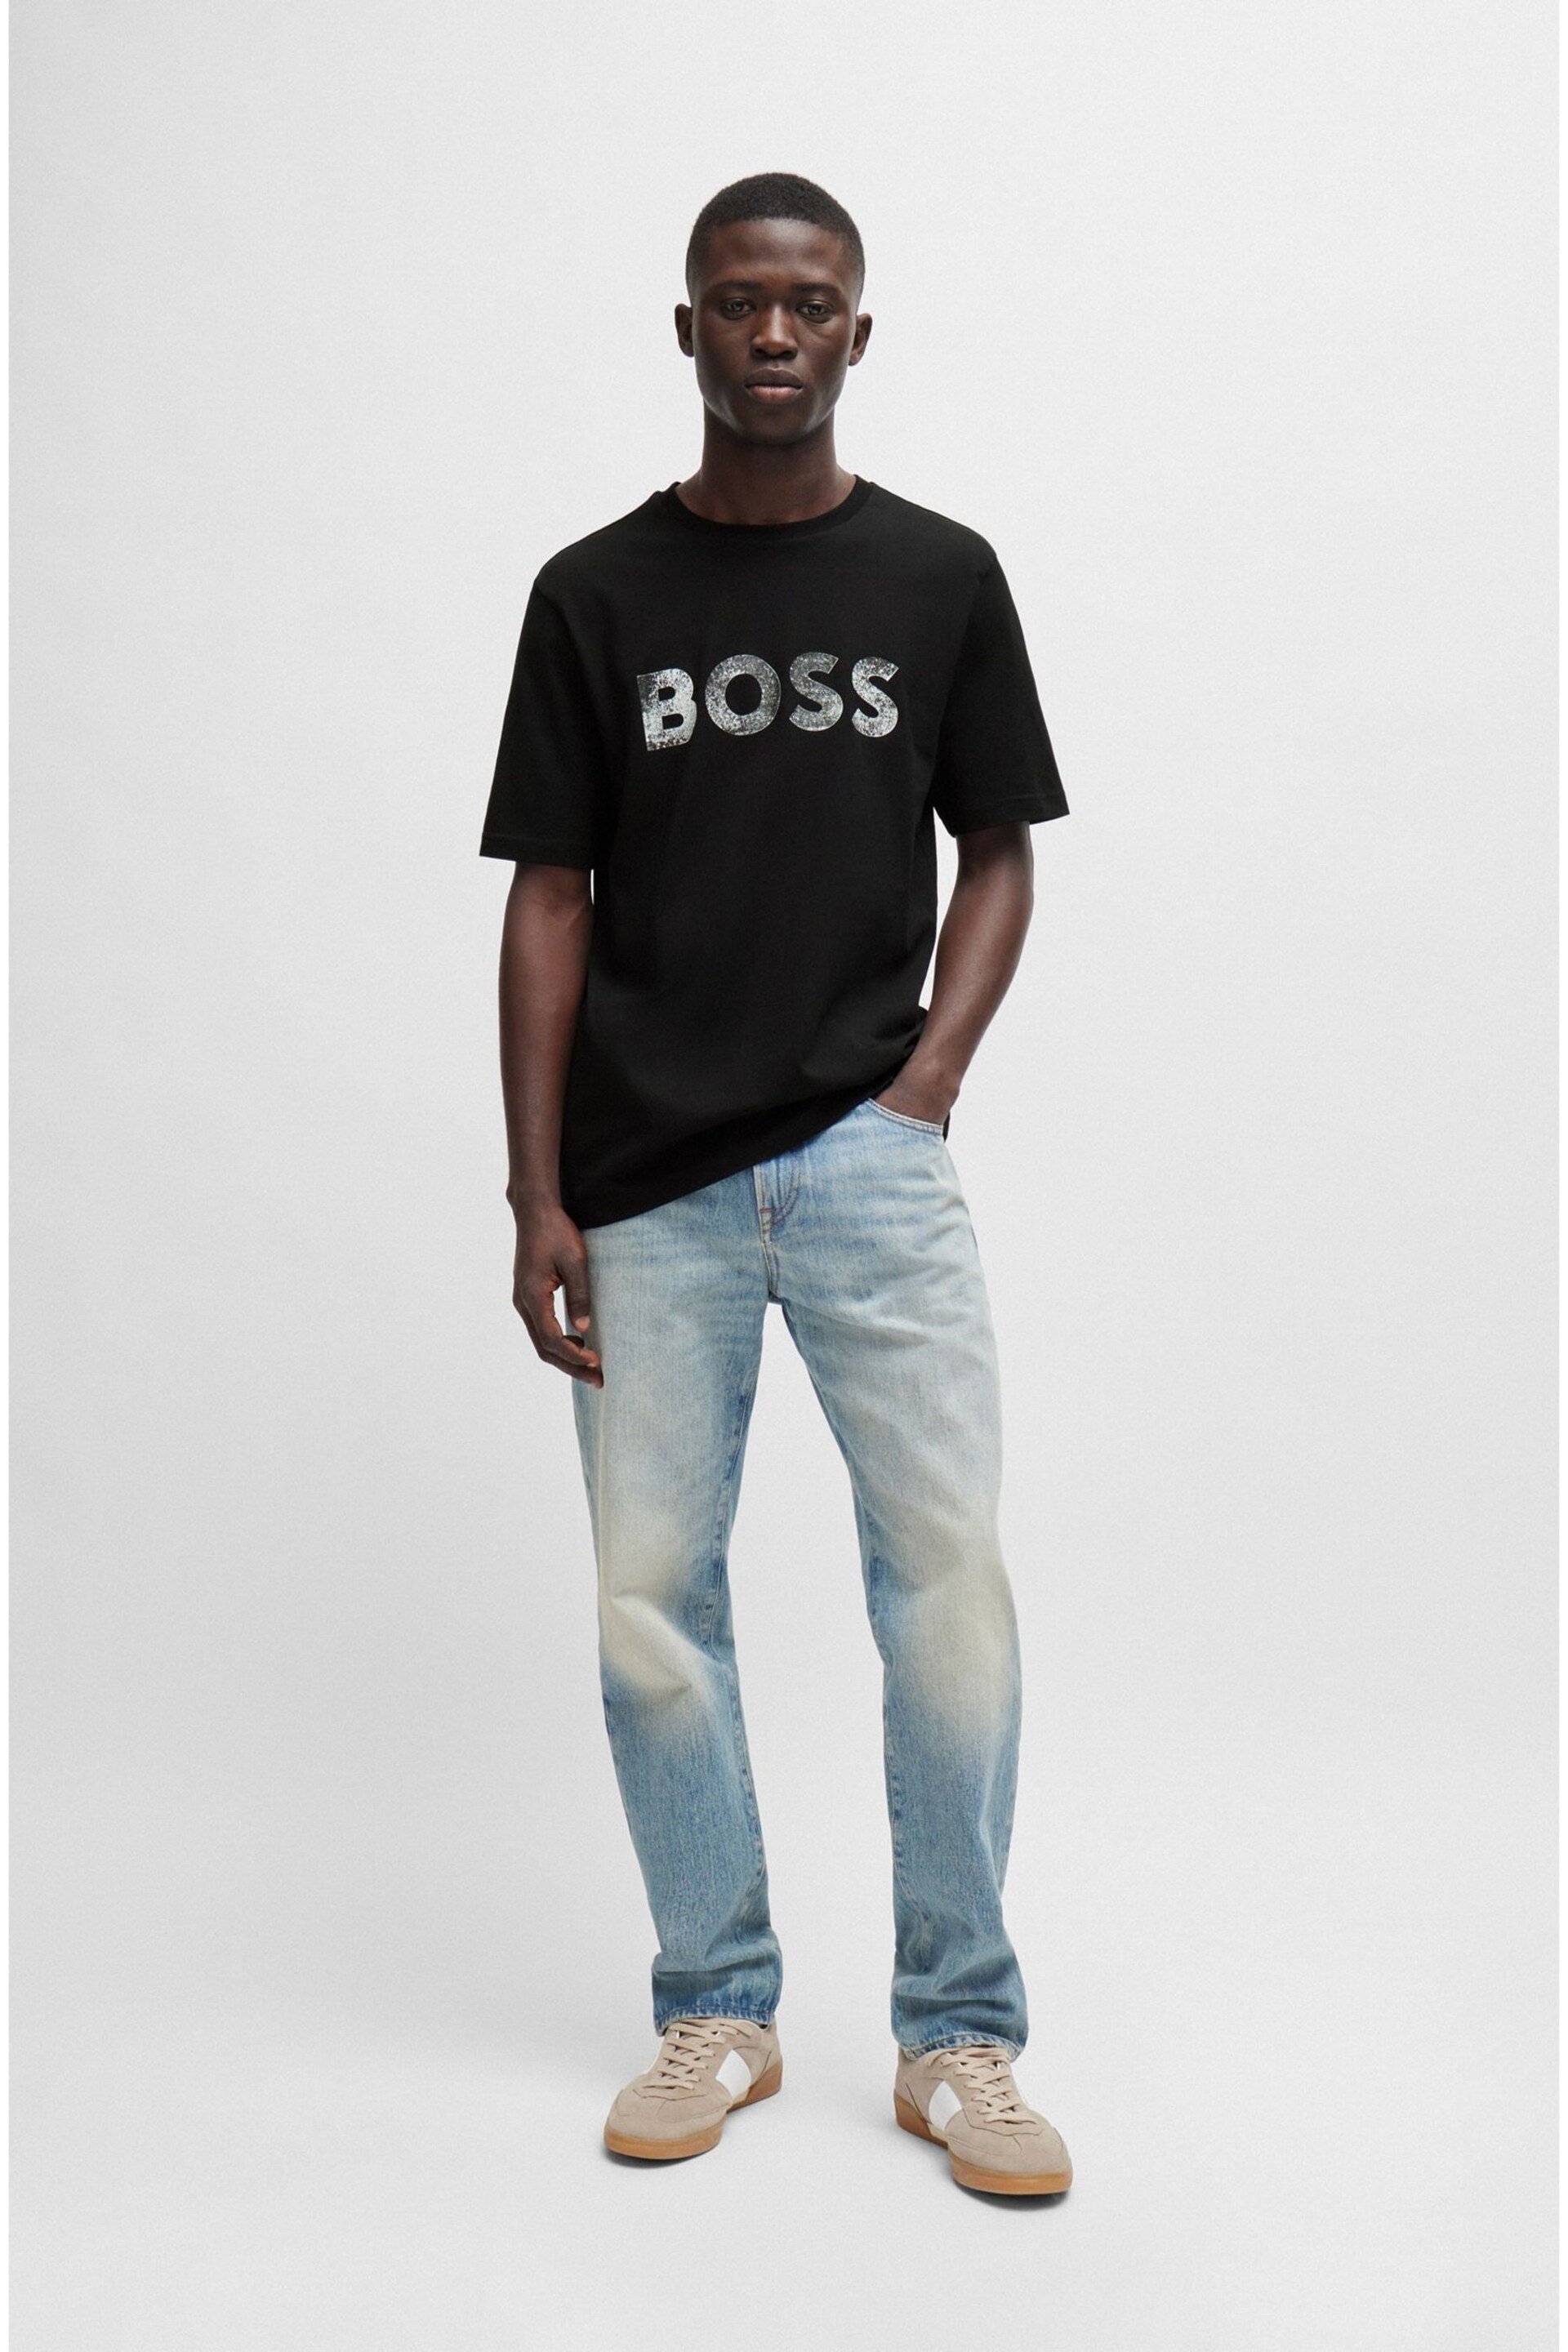 BOSS Black Cotton-Jersey T-Shirt With Logo Printboss - Image 4 of 5